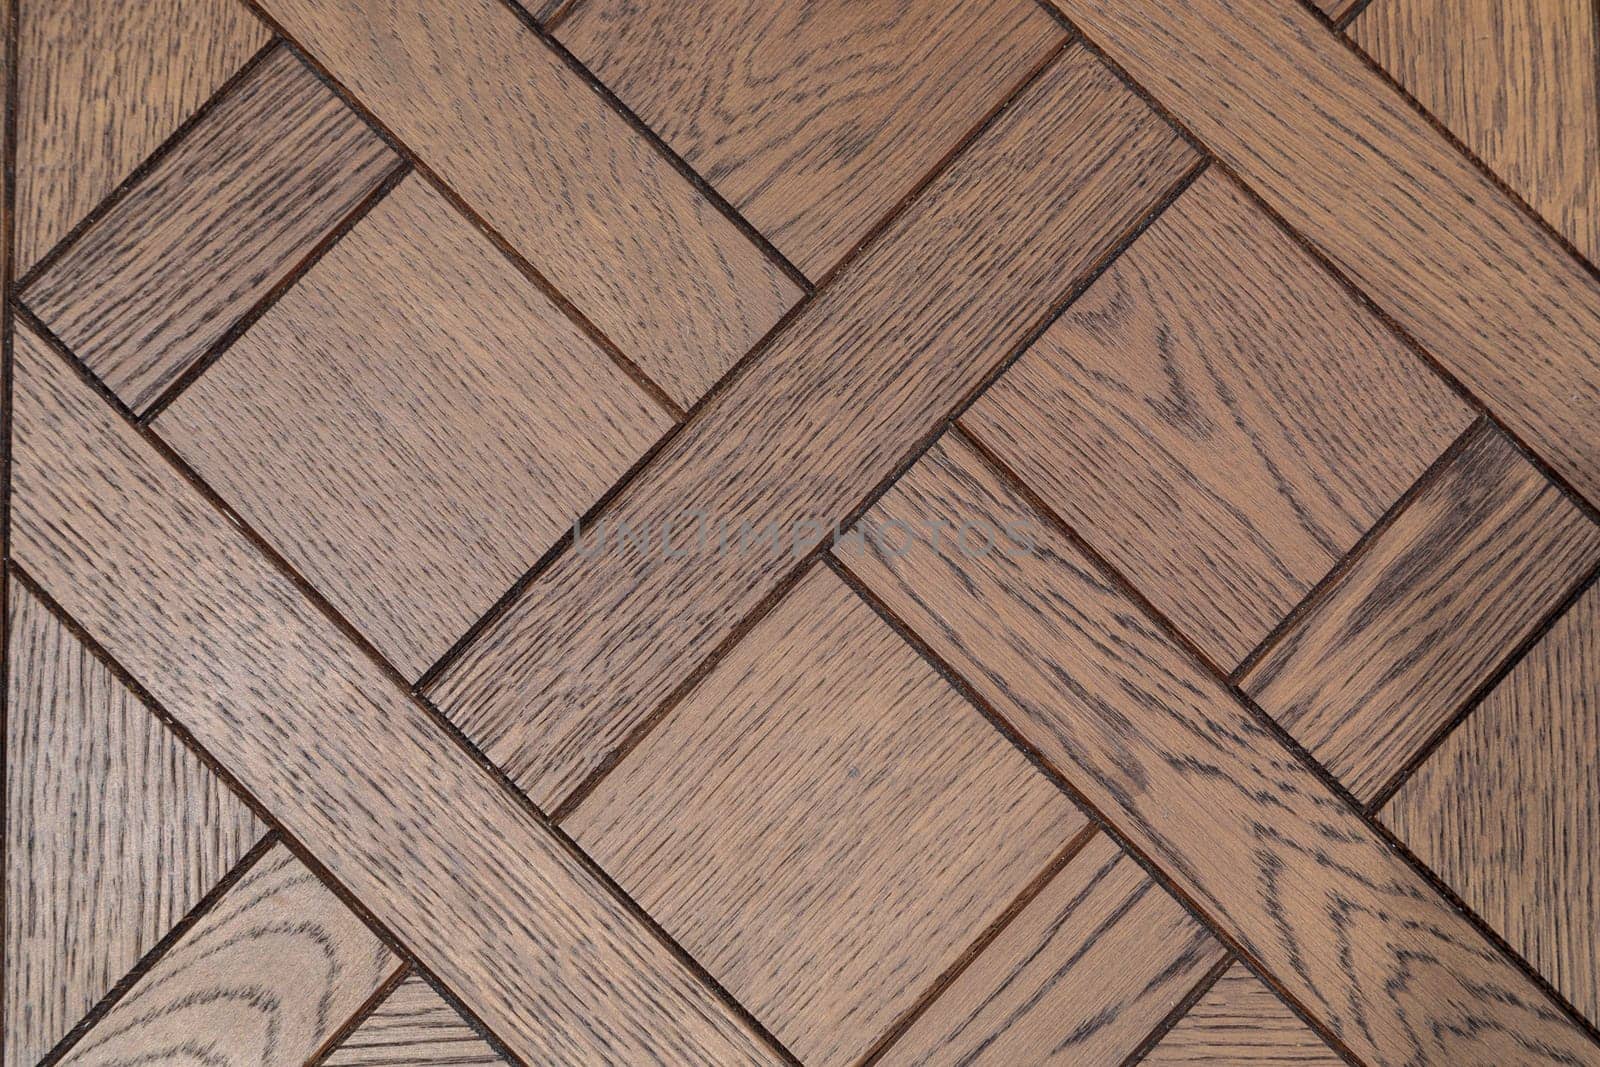 Natural oak parquet. Texture of wooden parquet in dark colors